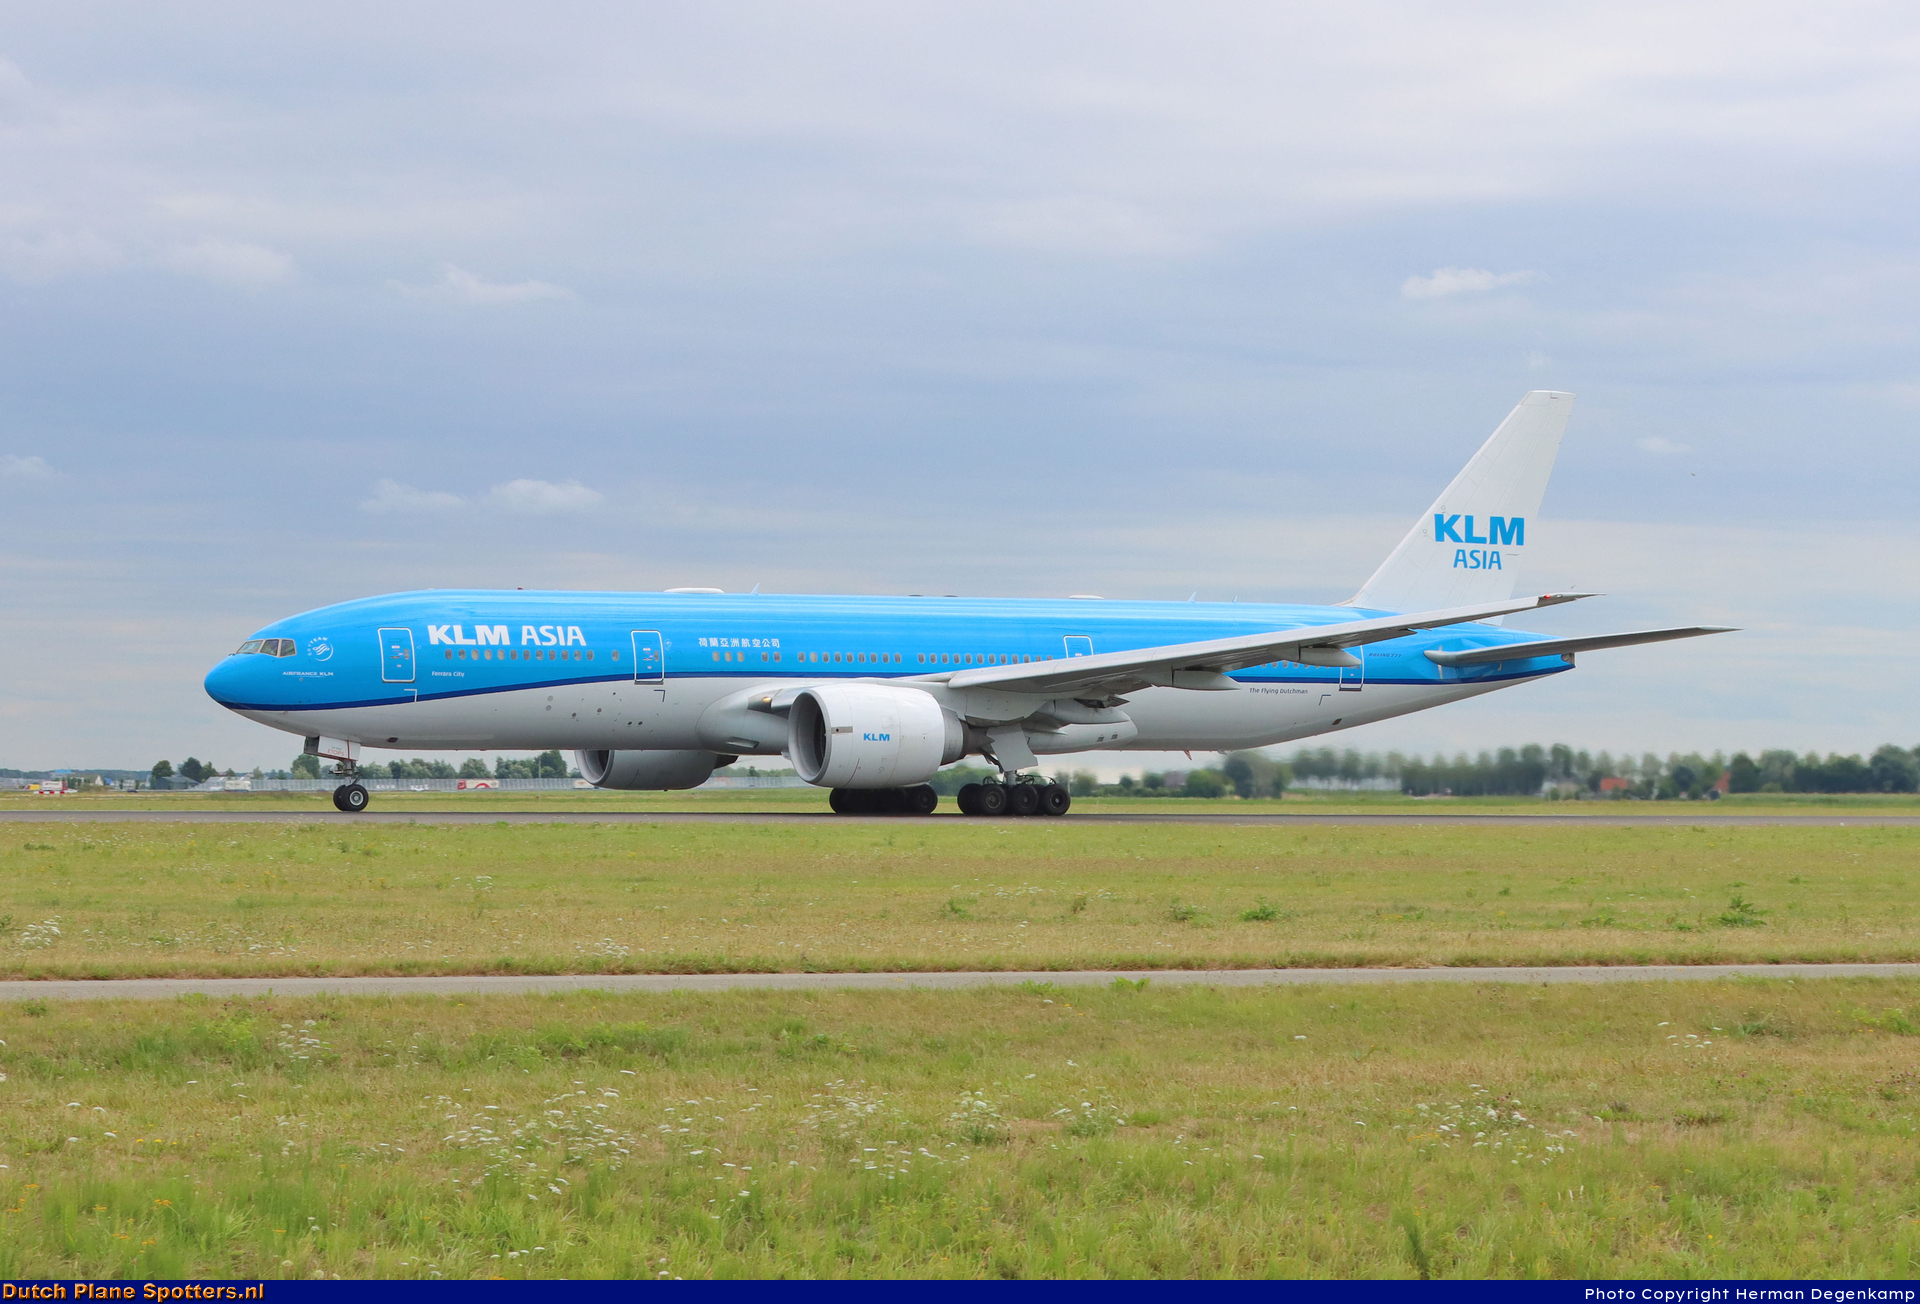 PH-BQF Boeing 777-200 KLM Asia by Herman Degenkamp